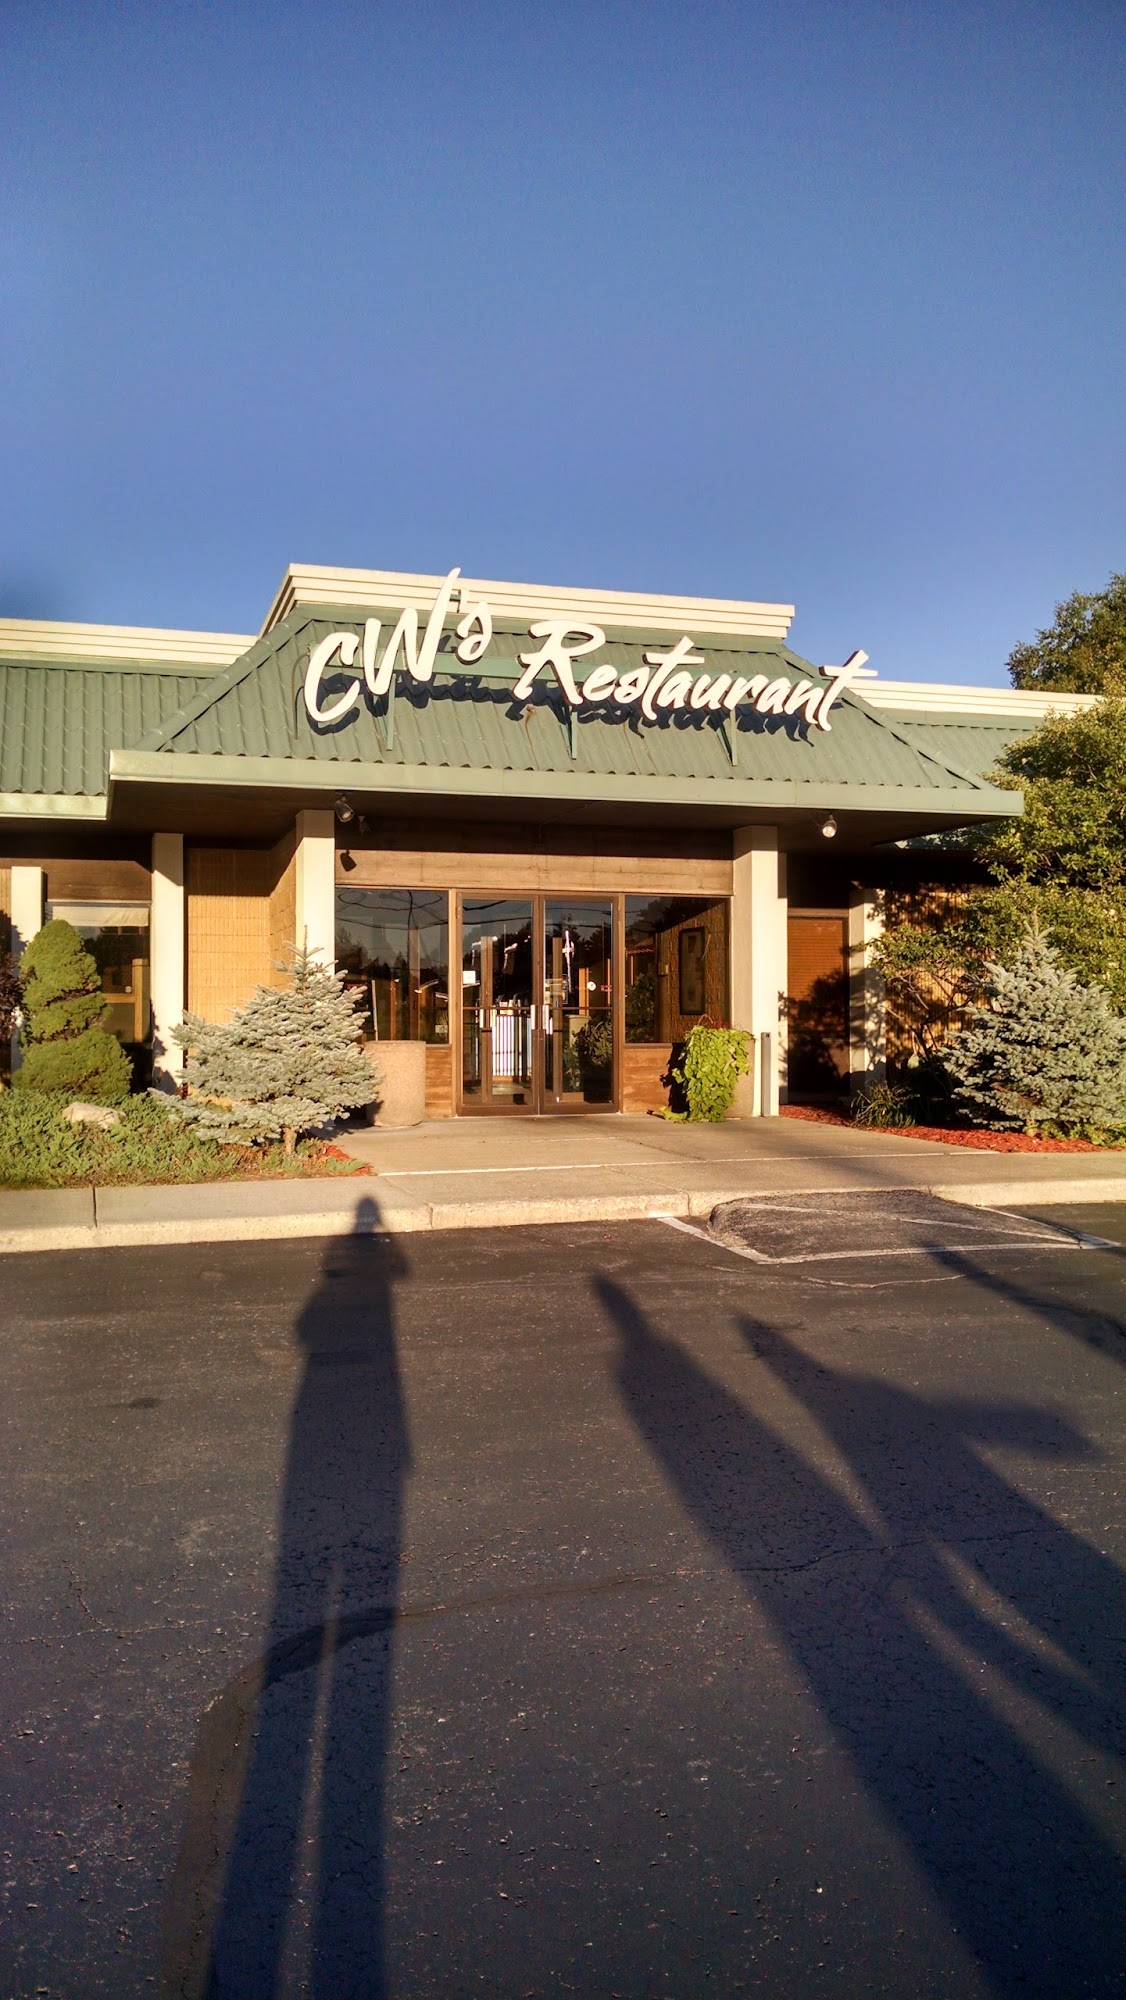 CW's Restaurant